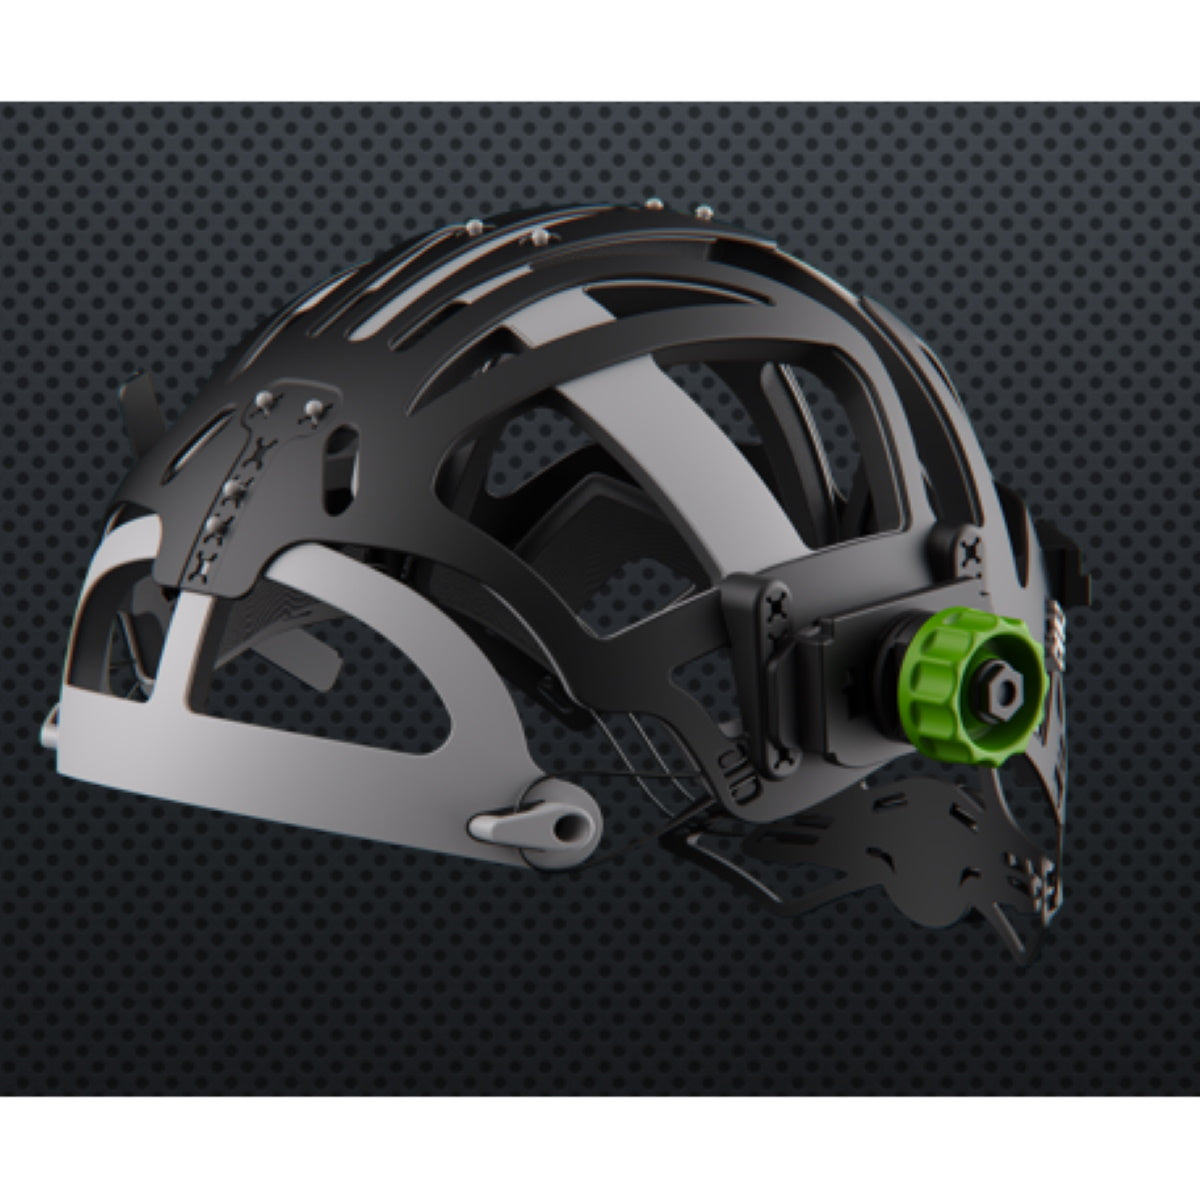 Optrel Black Panoramaxx CLT Welding Helmet for E3000 PAPR (4441.780-US)